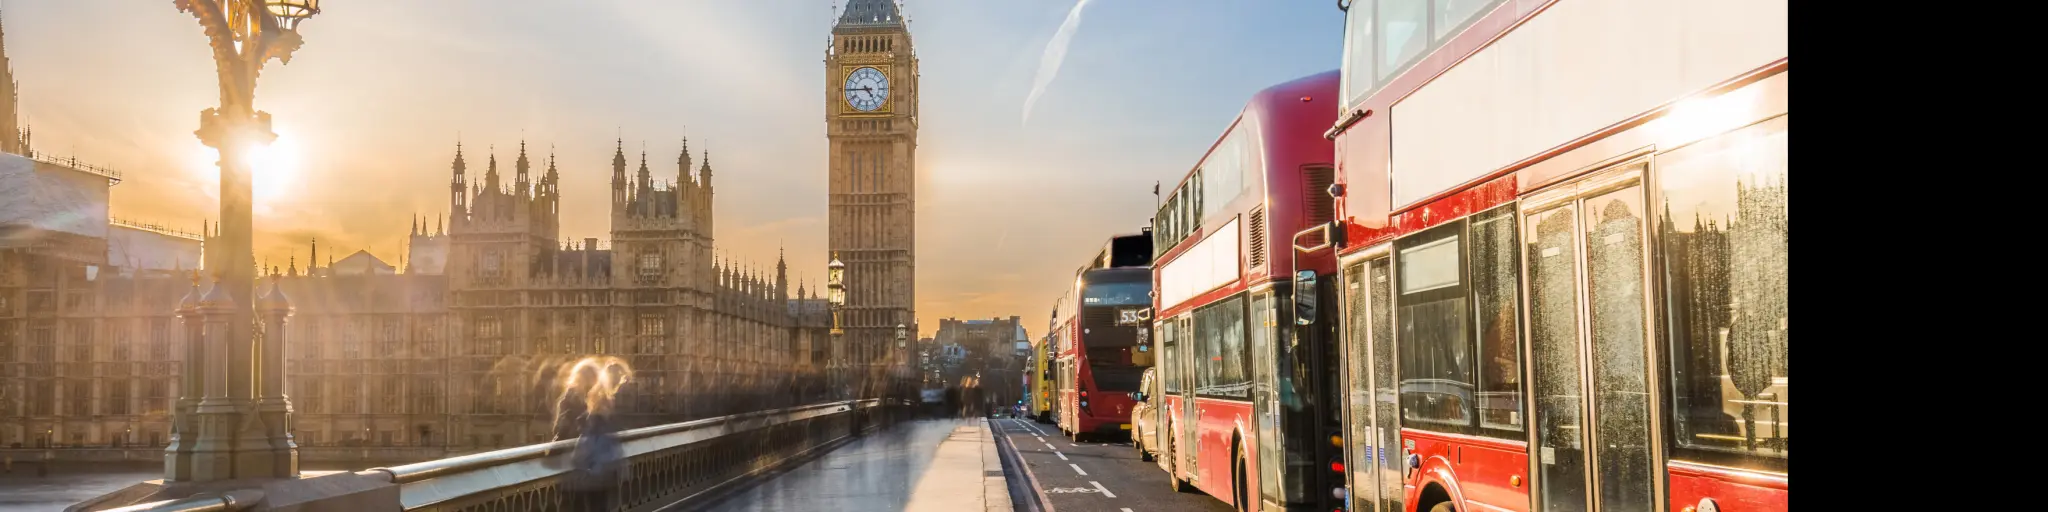 Perfect London city break - view of Big Ben from Westminster Bridge